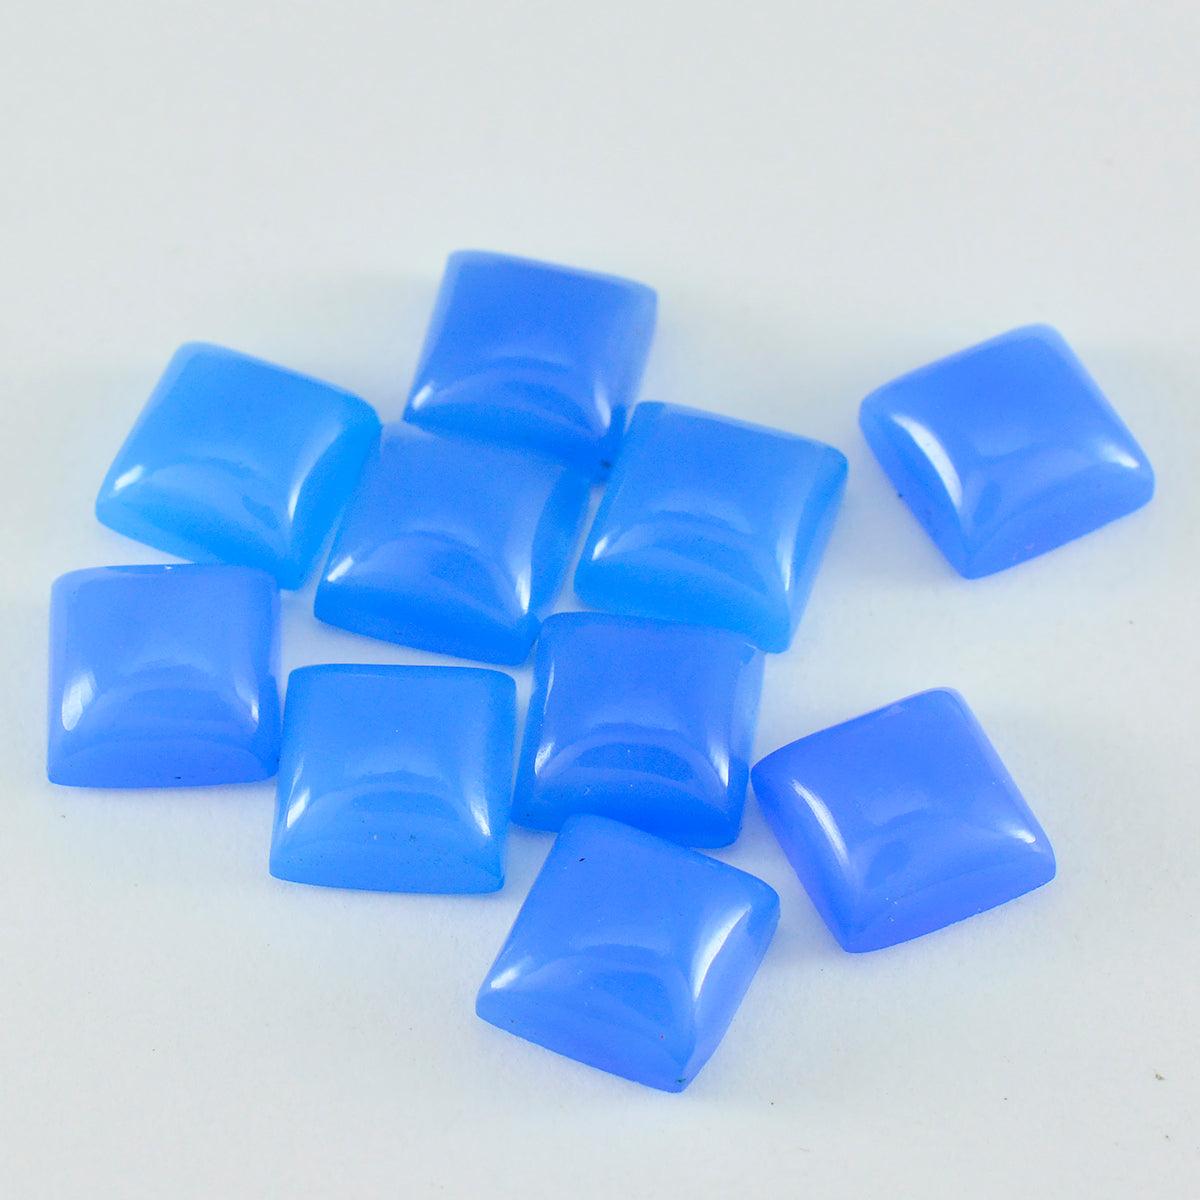 riyogems 1pc ブルー カルセドニー カボション 6x6 mm 正方形の形の見栄えの良い高品質の宝石